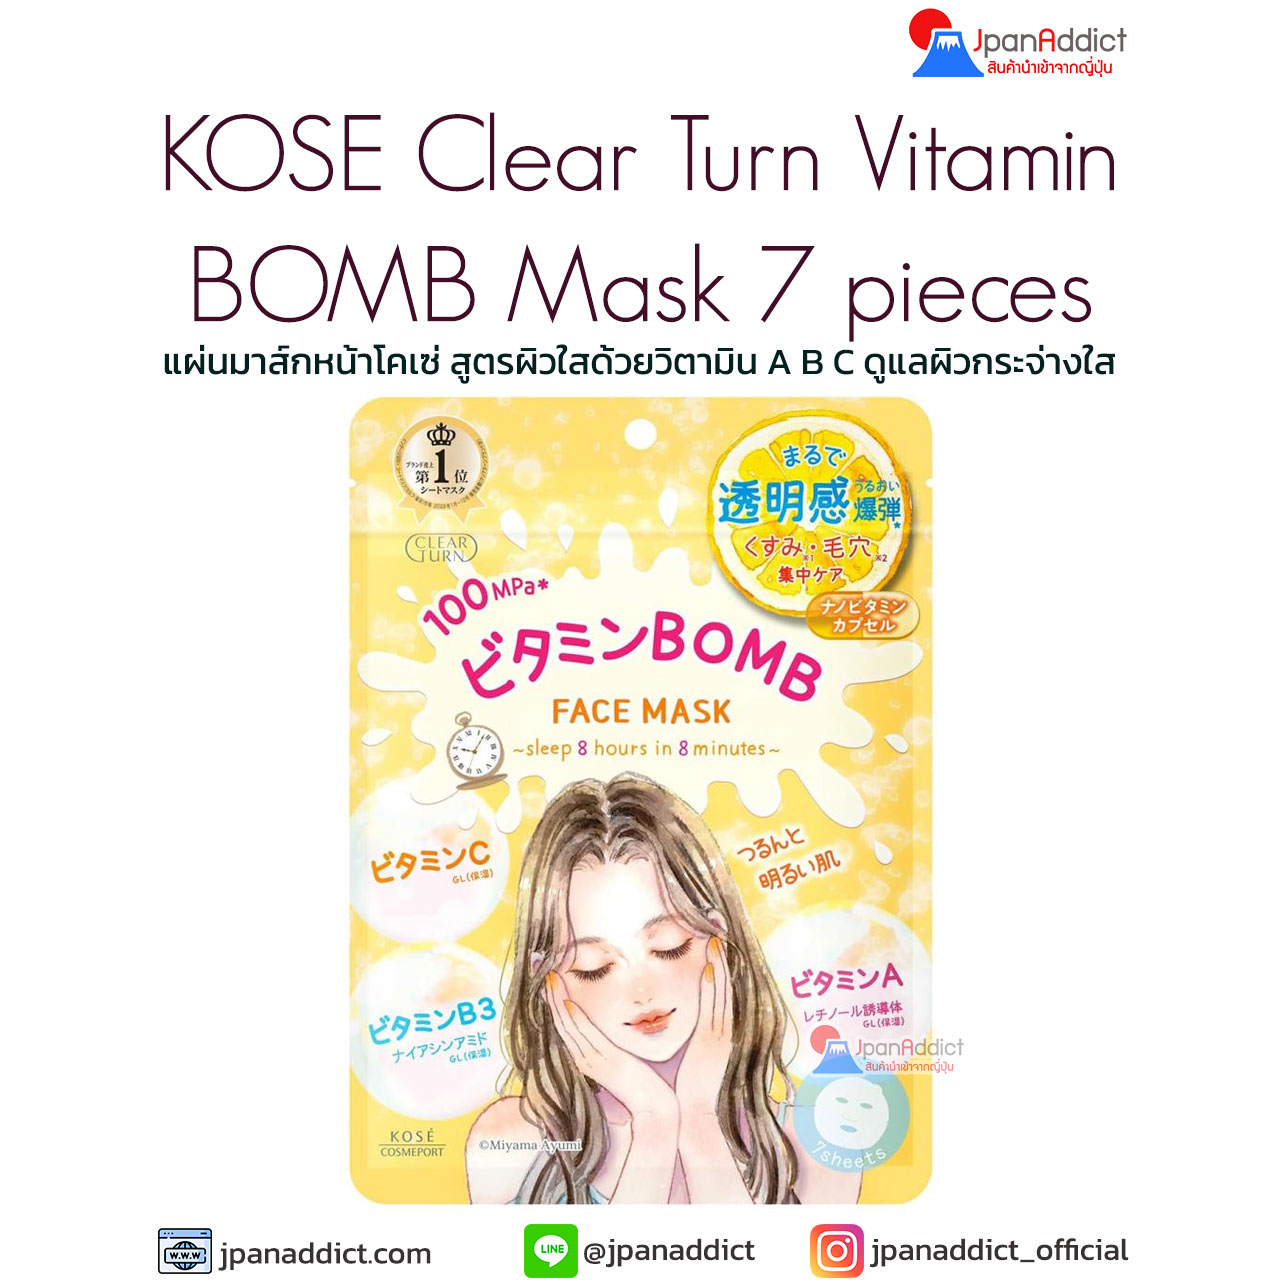 Kose Clear Turn Vitamin BOMB Mask 7 pieces